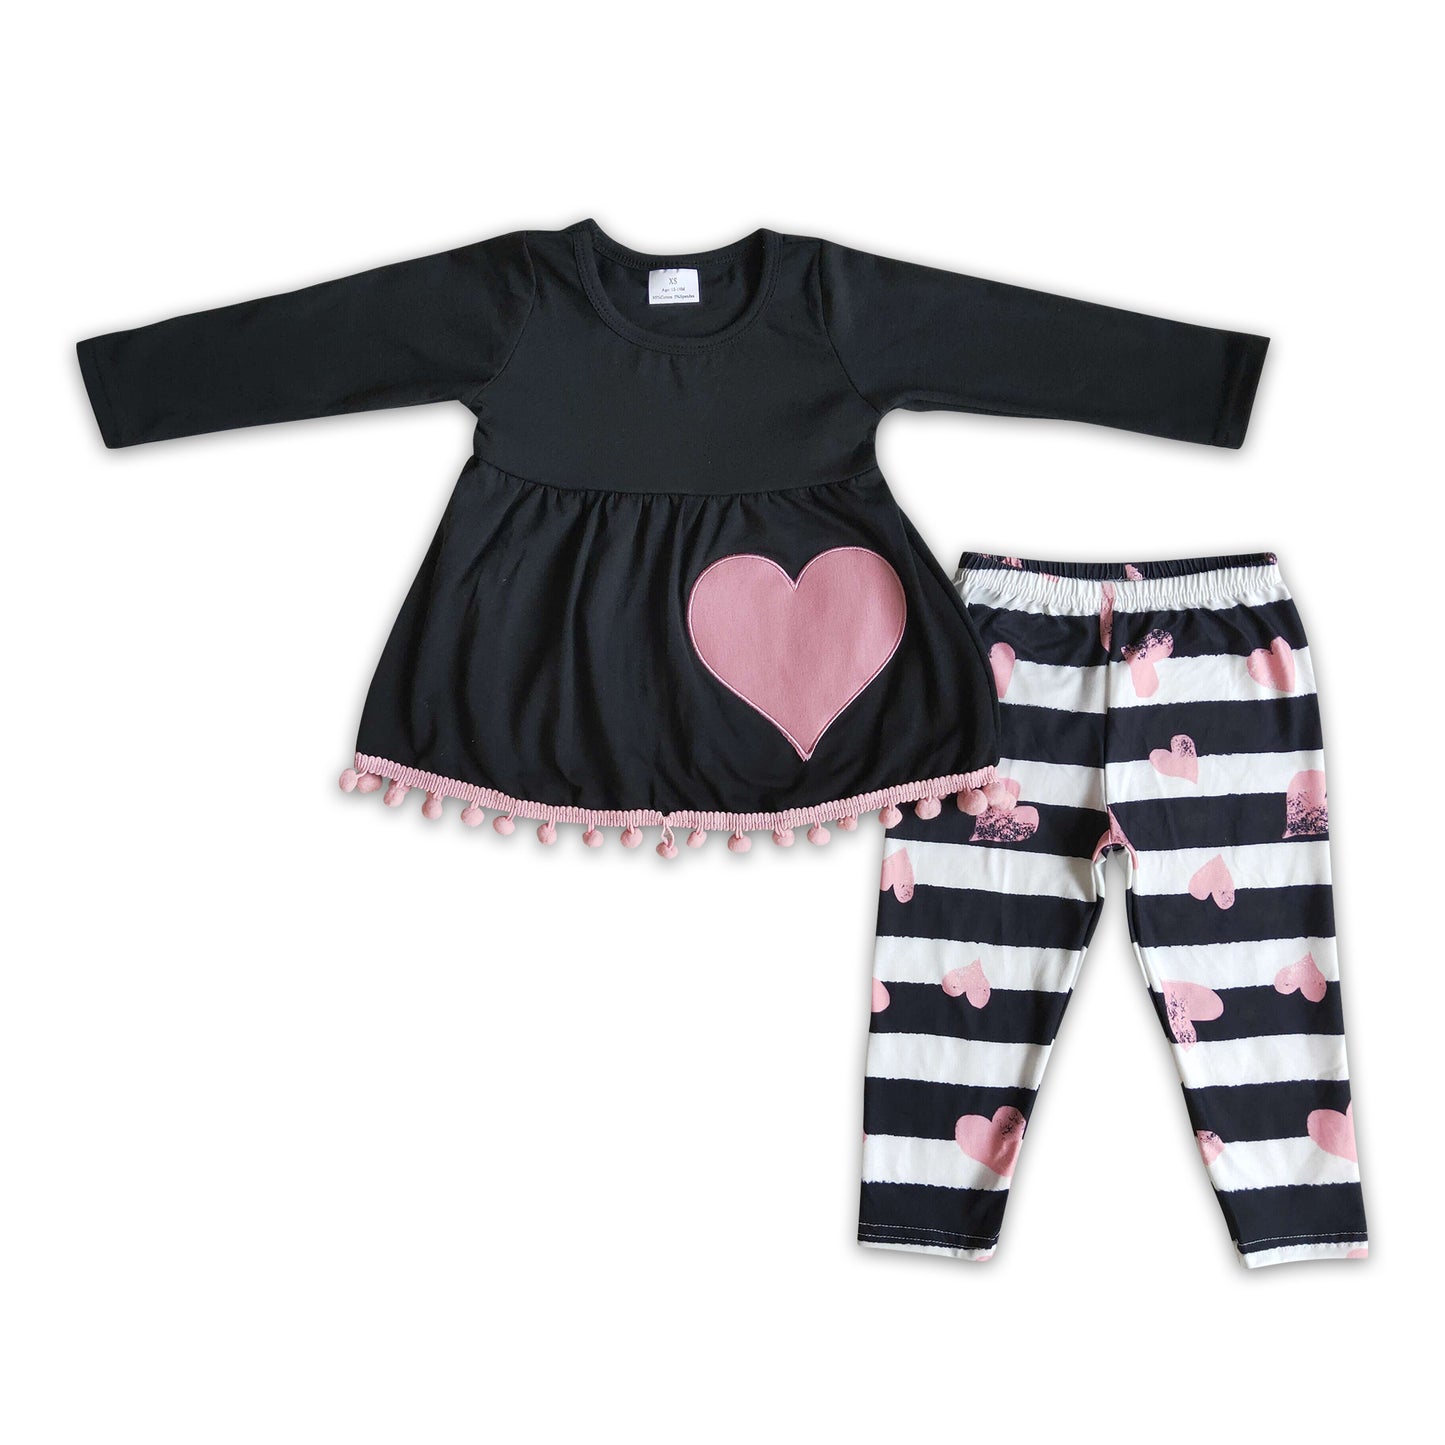 Heart embroidery pom pom tunic leggings set girls valentine's clothing